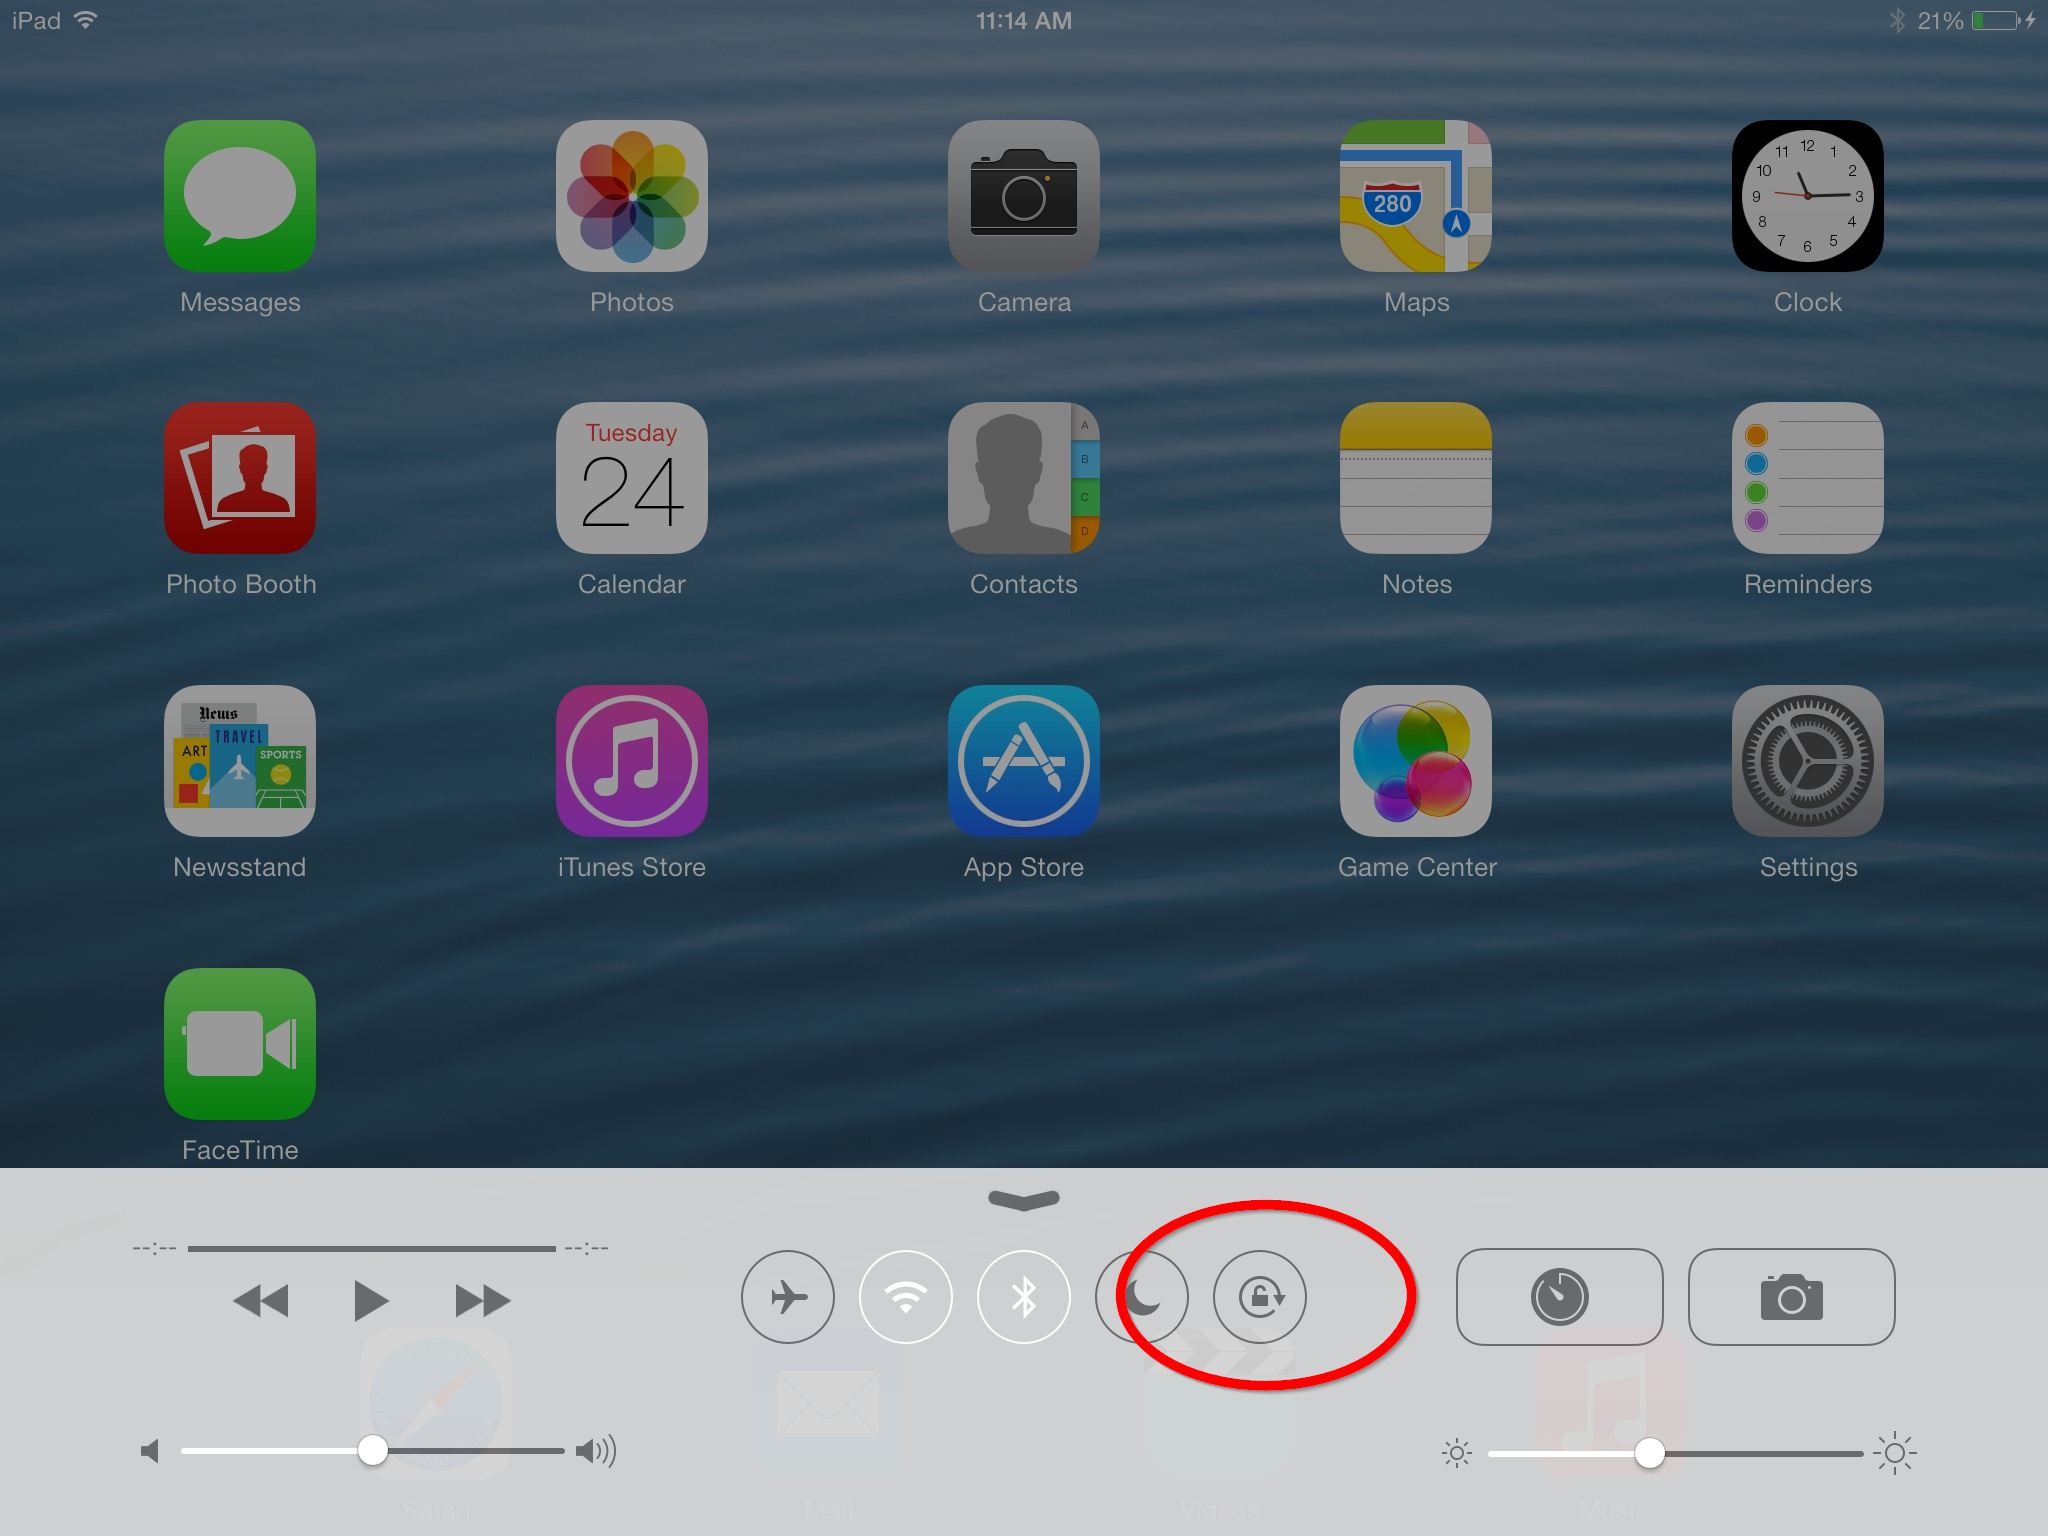 KB0014 - Lock screen rotation on an iPad (iOS 7) - Online Help